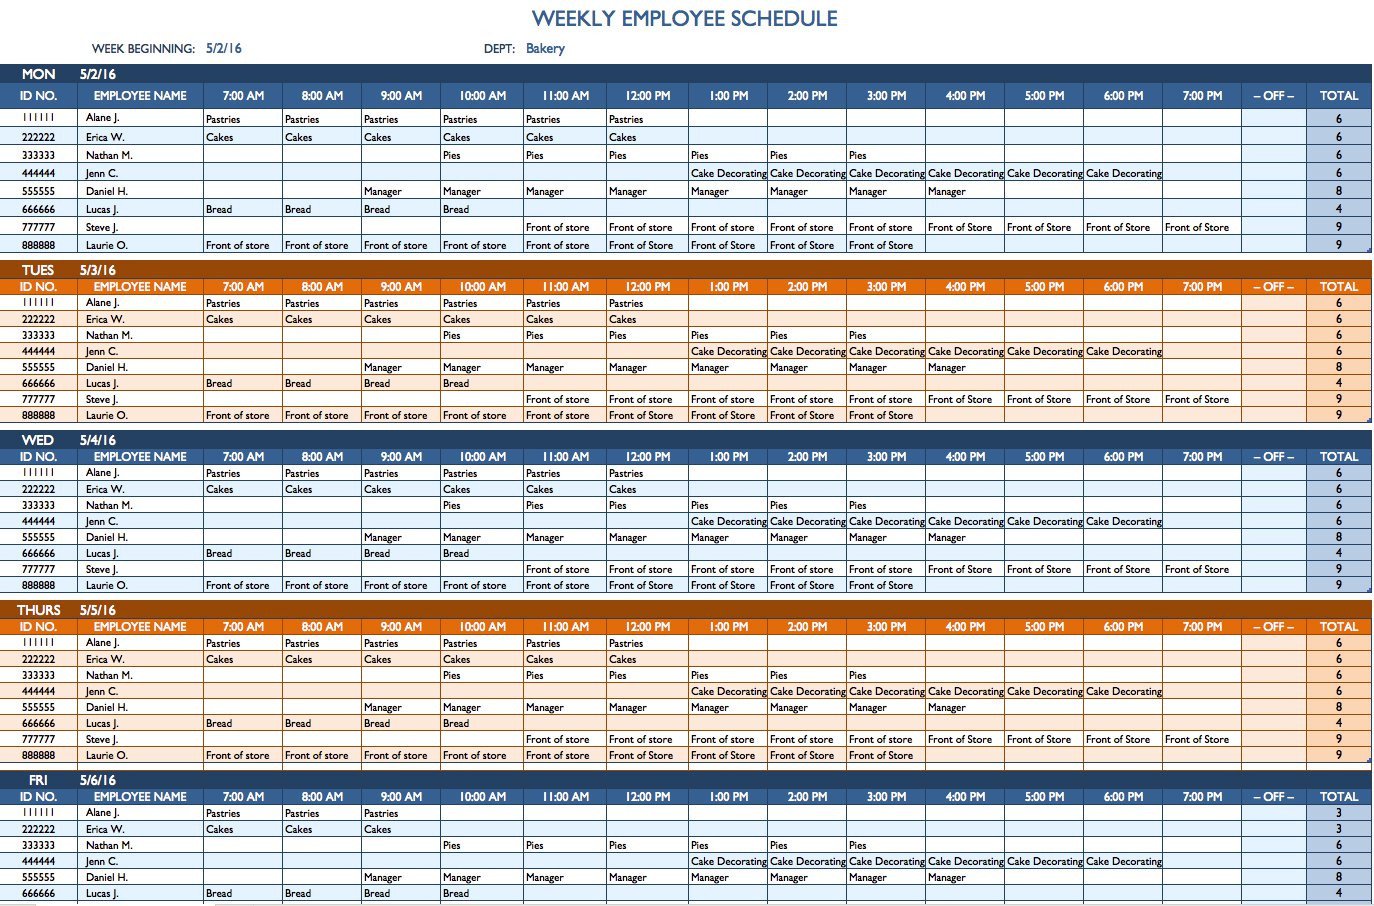 Excel Employee Schedule Template Free Weekly Schedule Templates for Excel Smartsheet